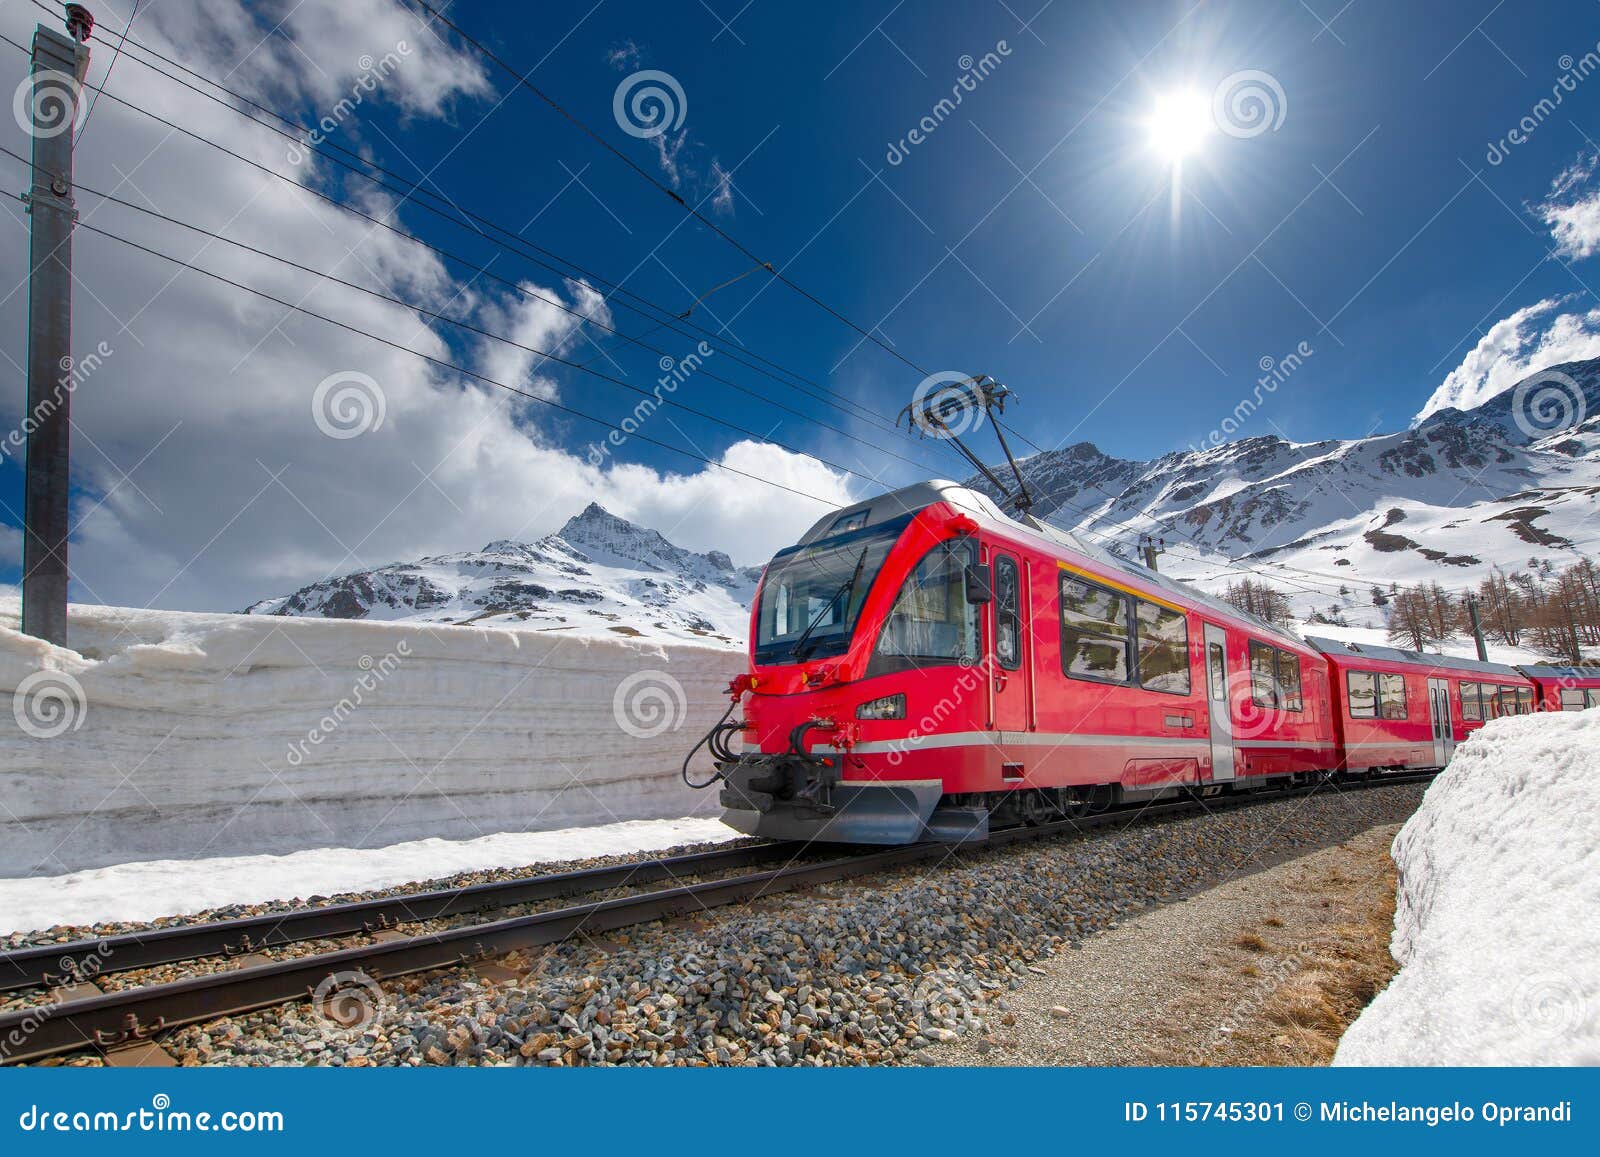 swiss mountain train bernina express crossed alps with snow wall